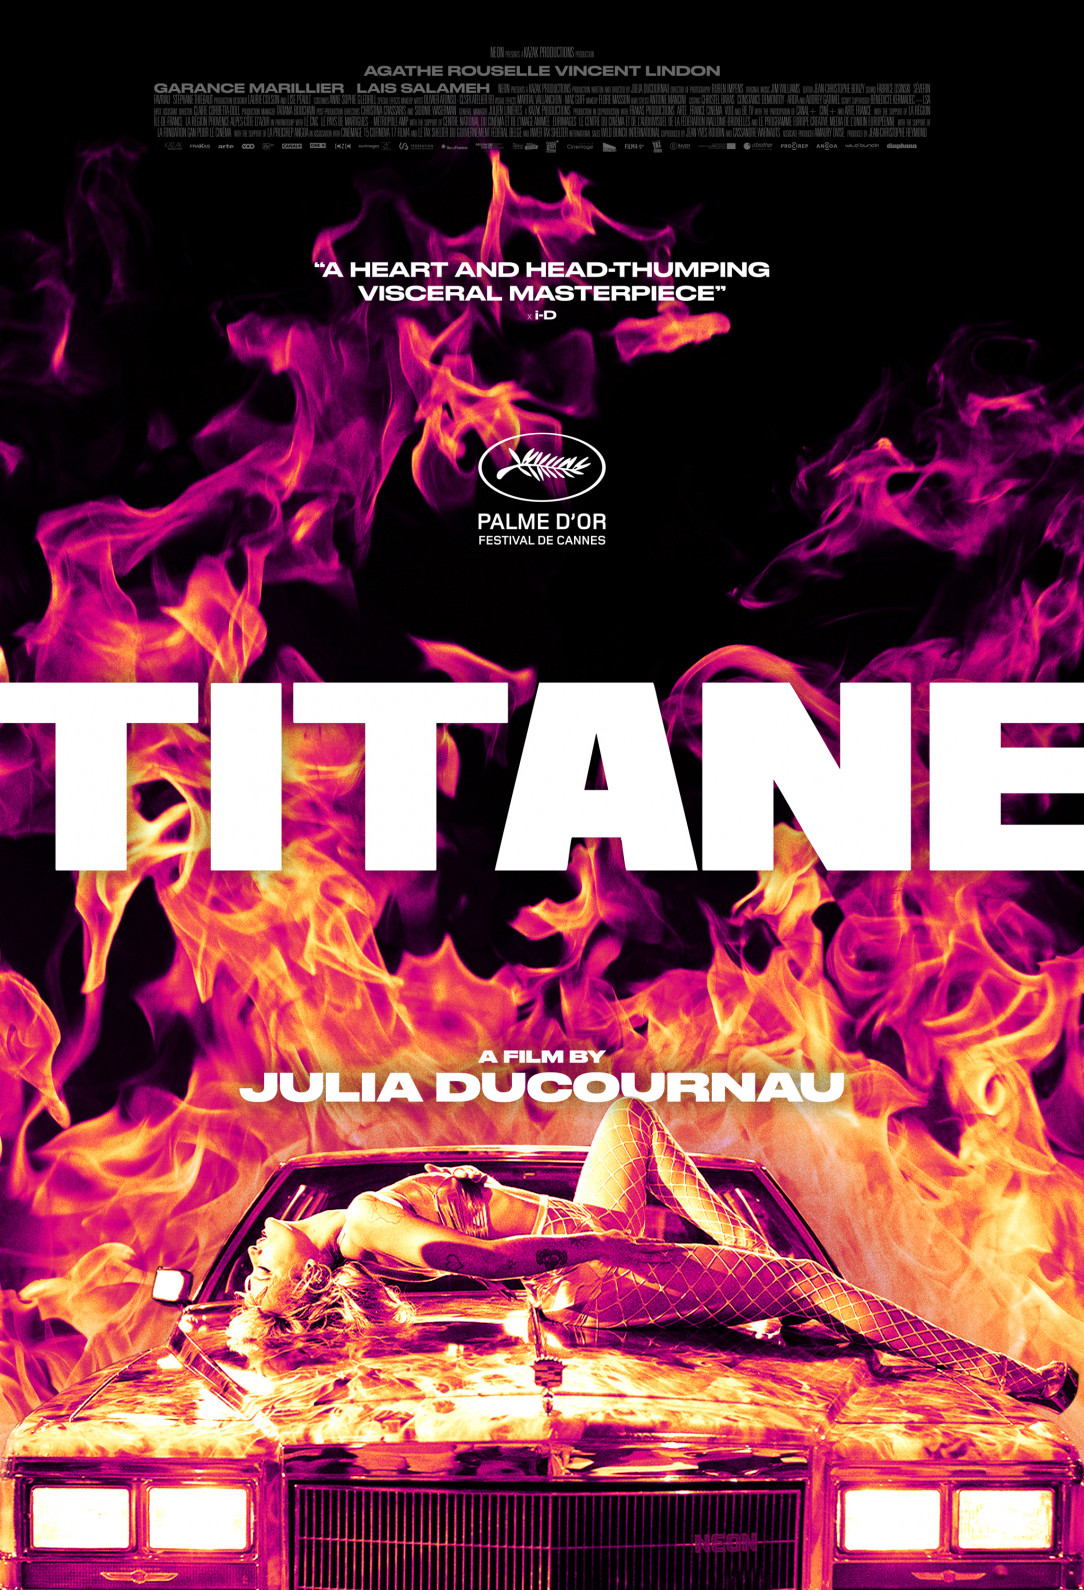 New Poster for Julia Ducournau’s Palme d’Or winner TITANE